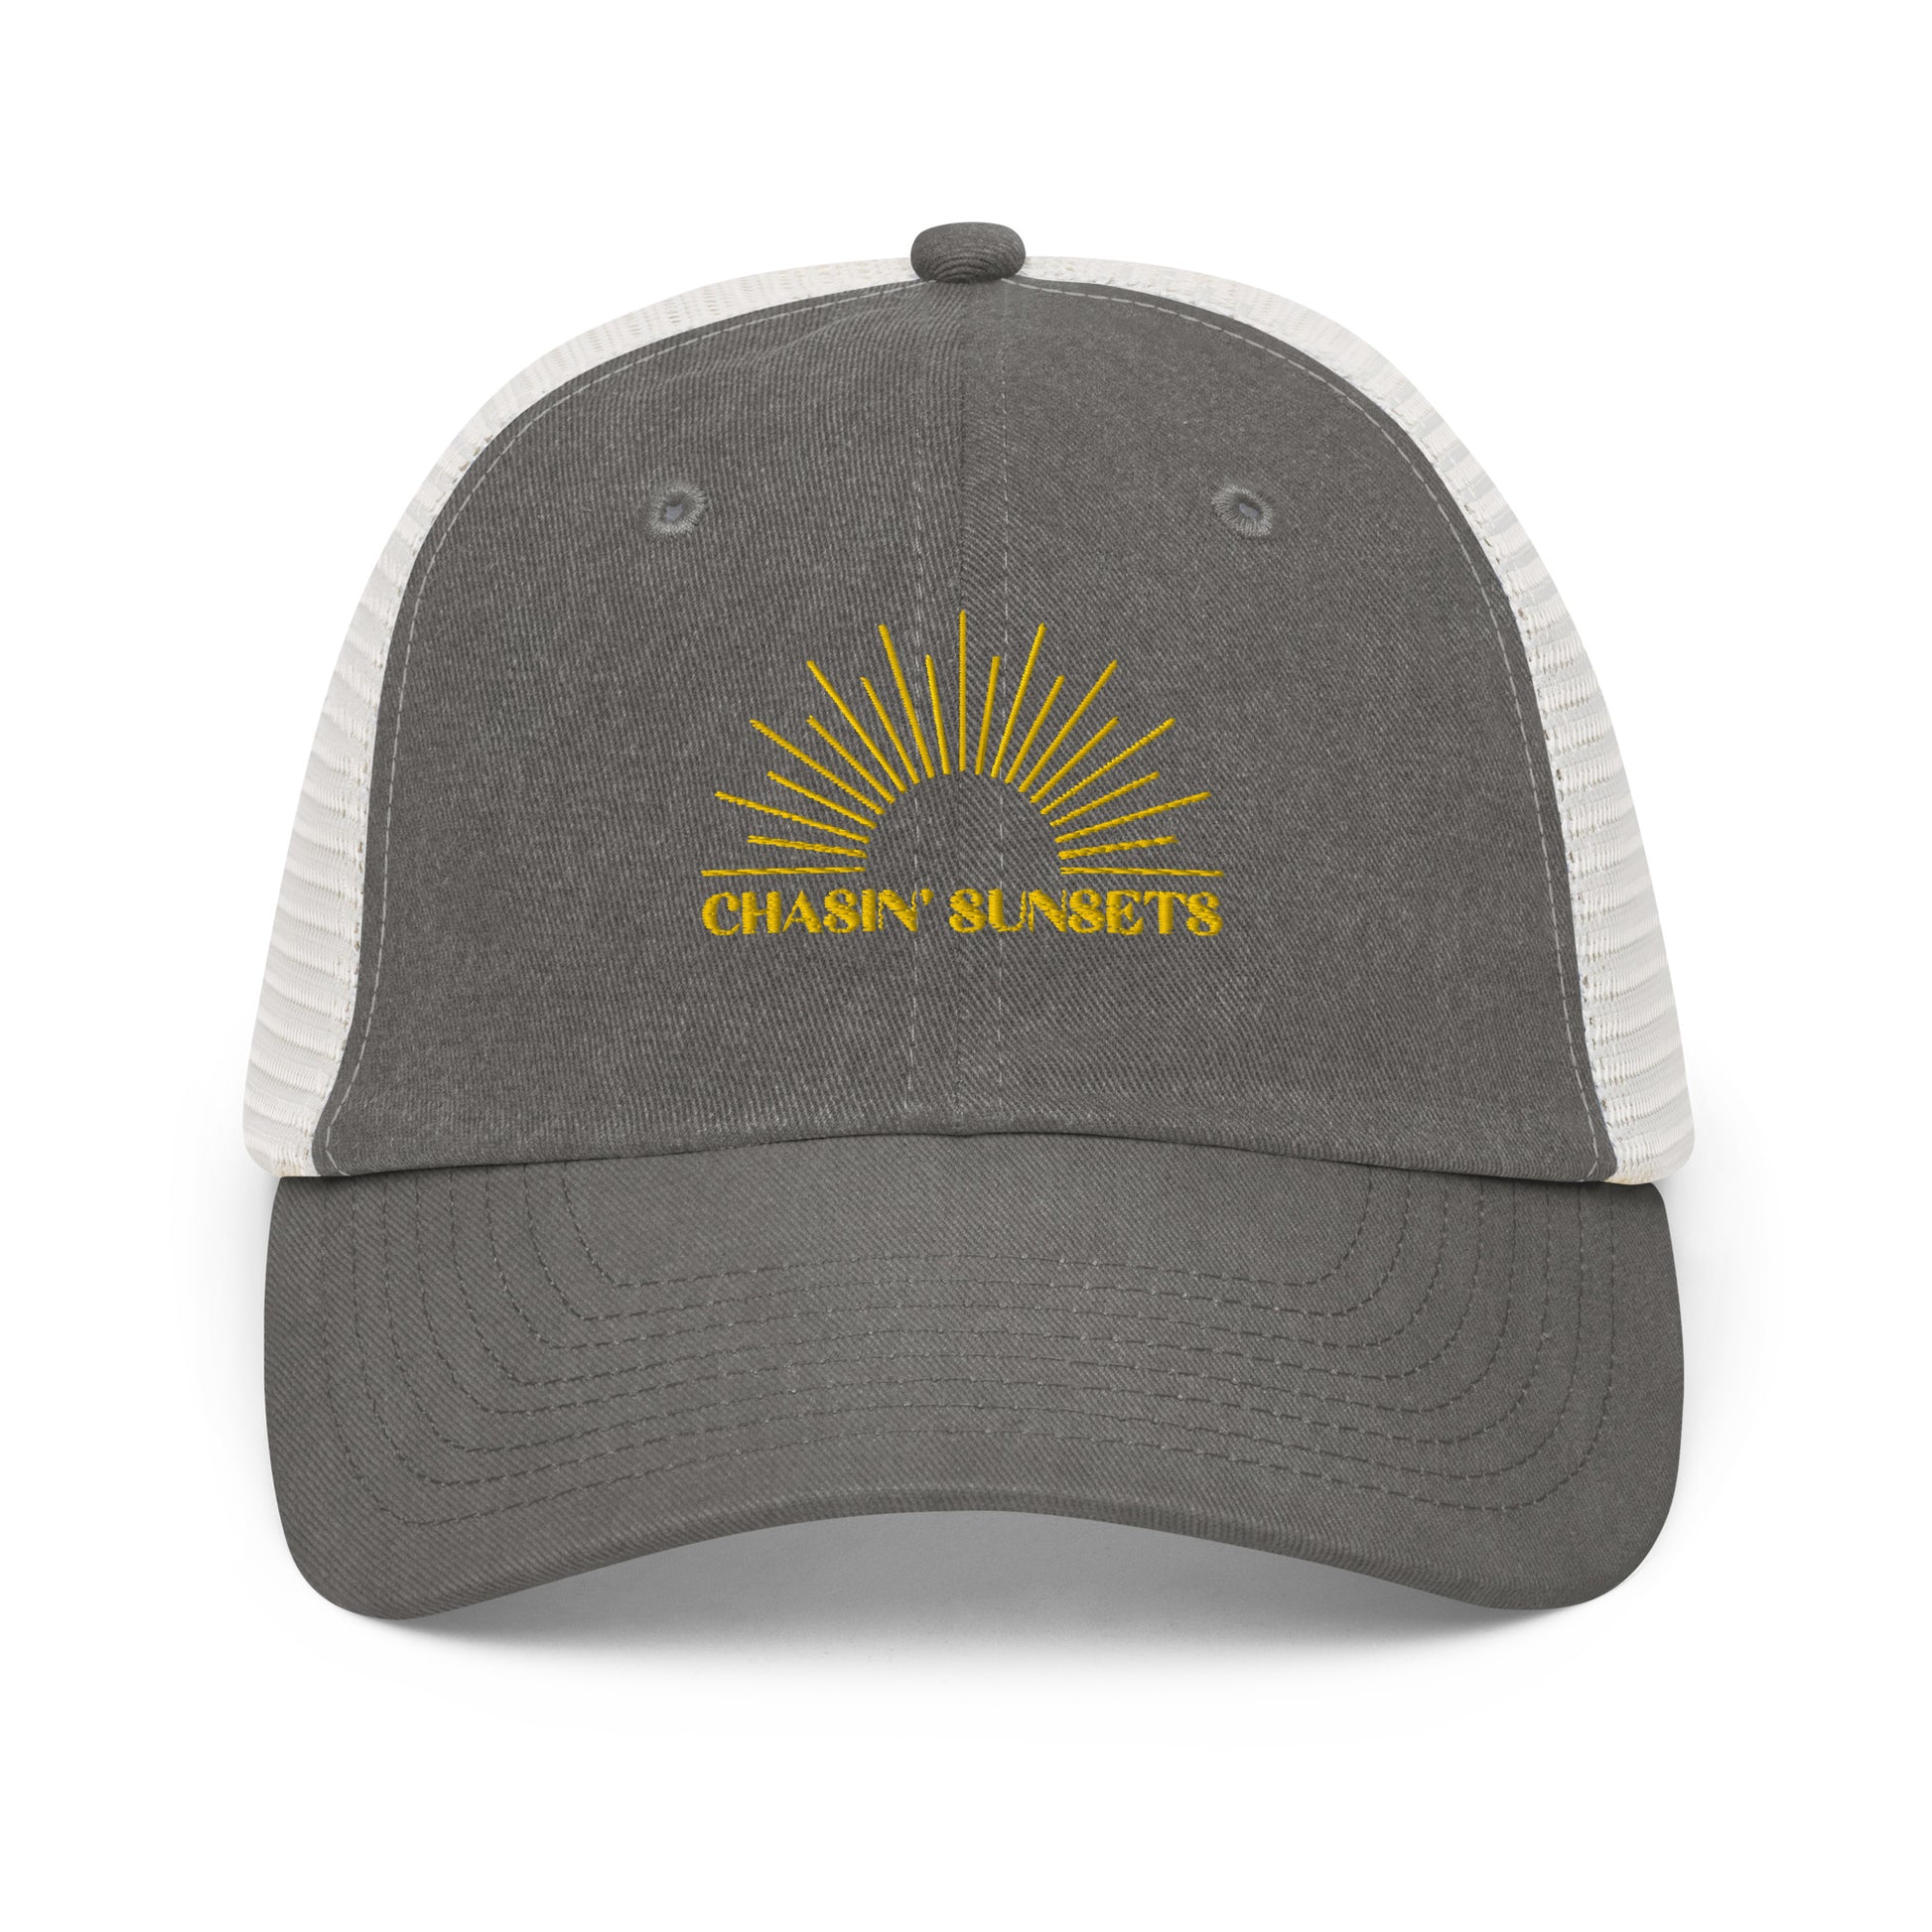 Chasing Sunsets Mesh Hat - Grey